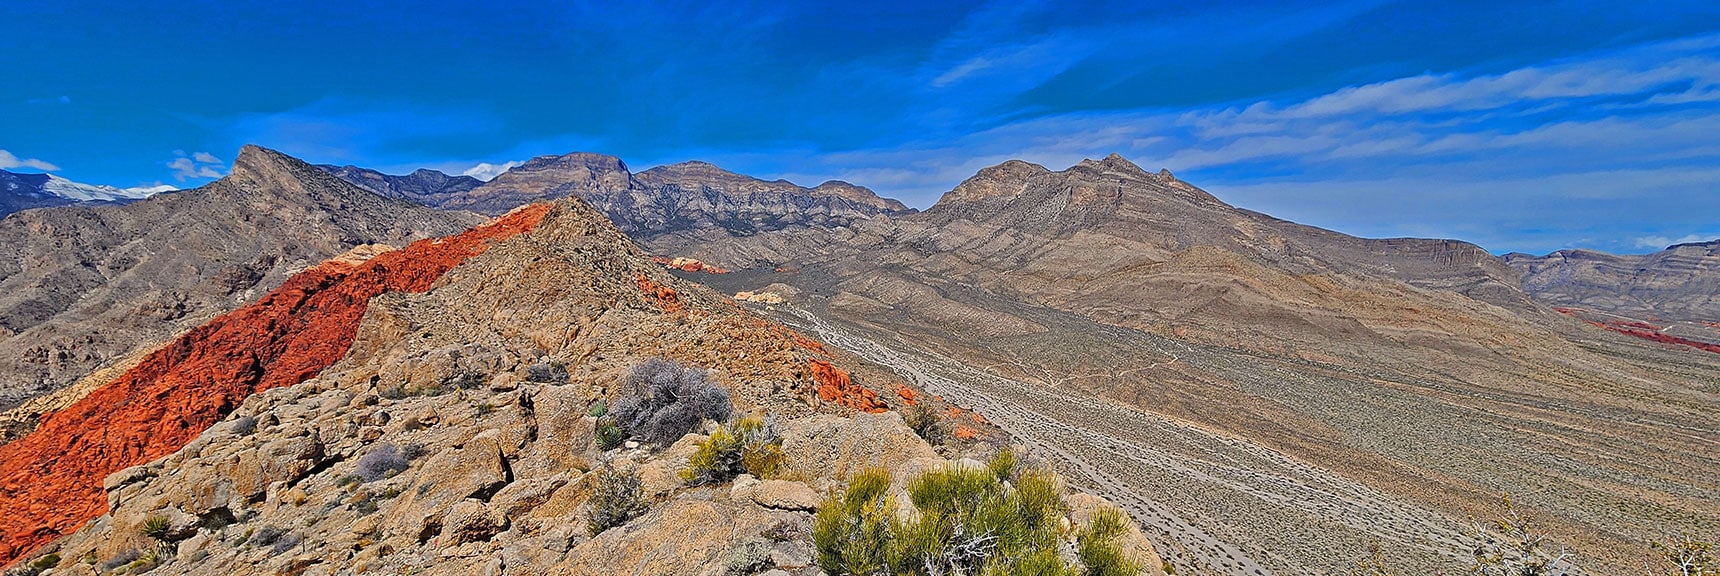 Northern View Takes in La Madre Ridgeline, Damsel Peak and Brownstone Basin. | Gray Cap Ridge / Brownstone Basin Loop | La Madre Mountains Wilderness, Nevada